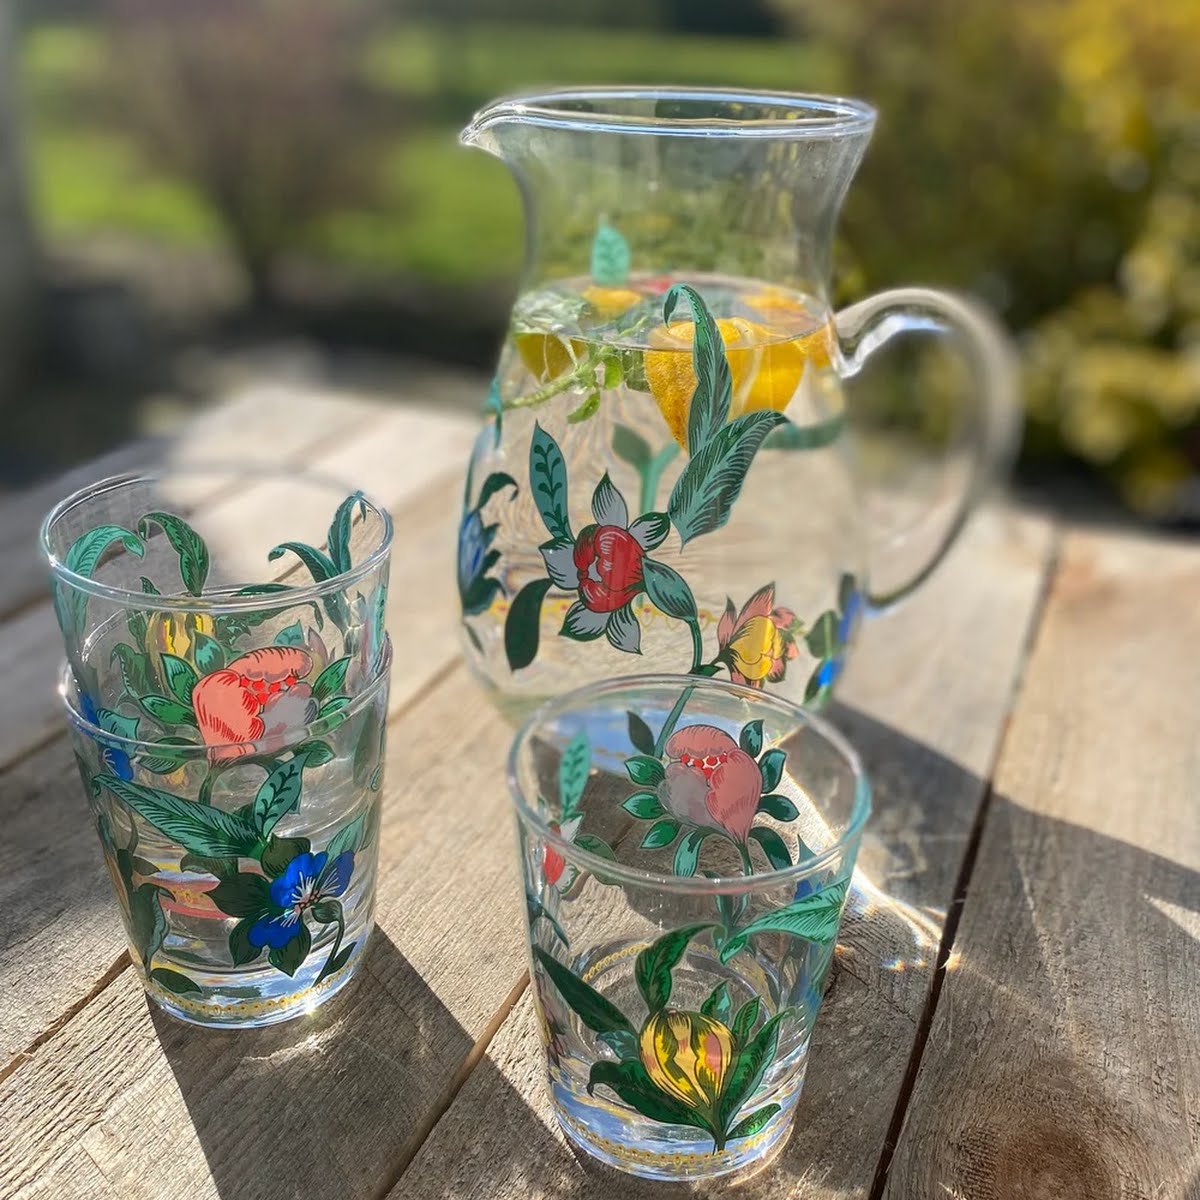 Botanical print glass jug, €28.50, Amber + Willow